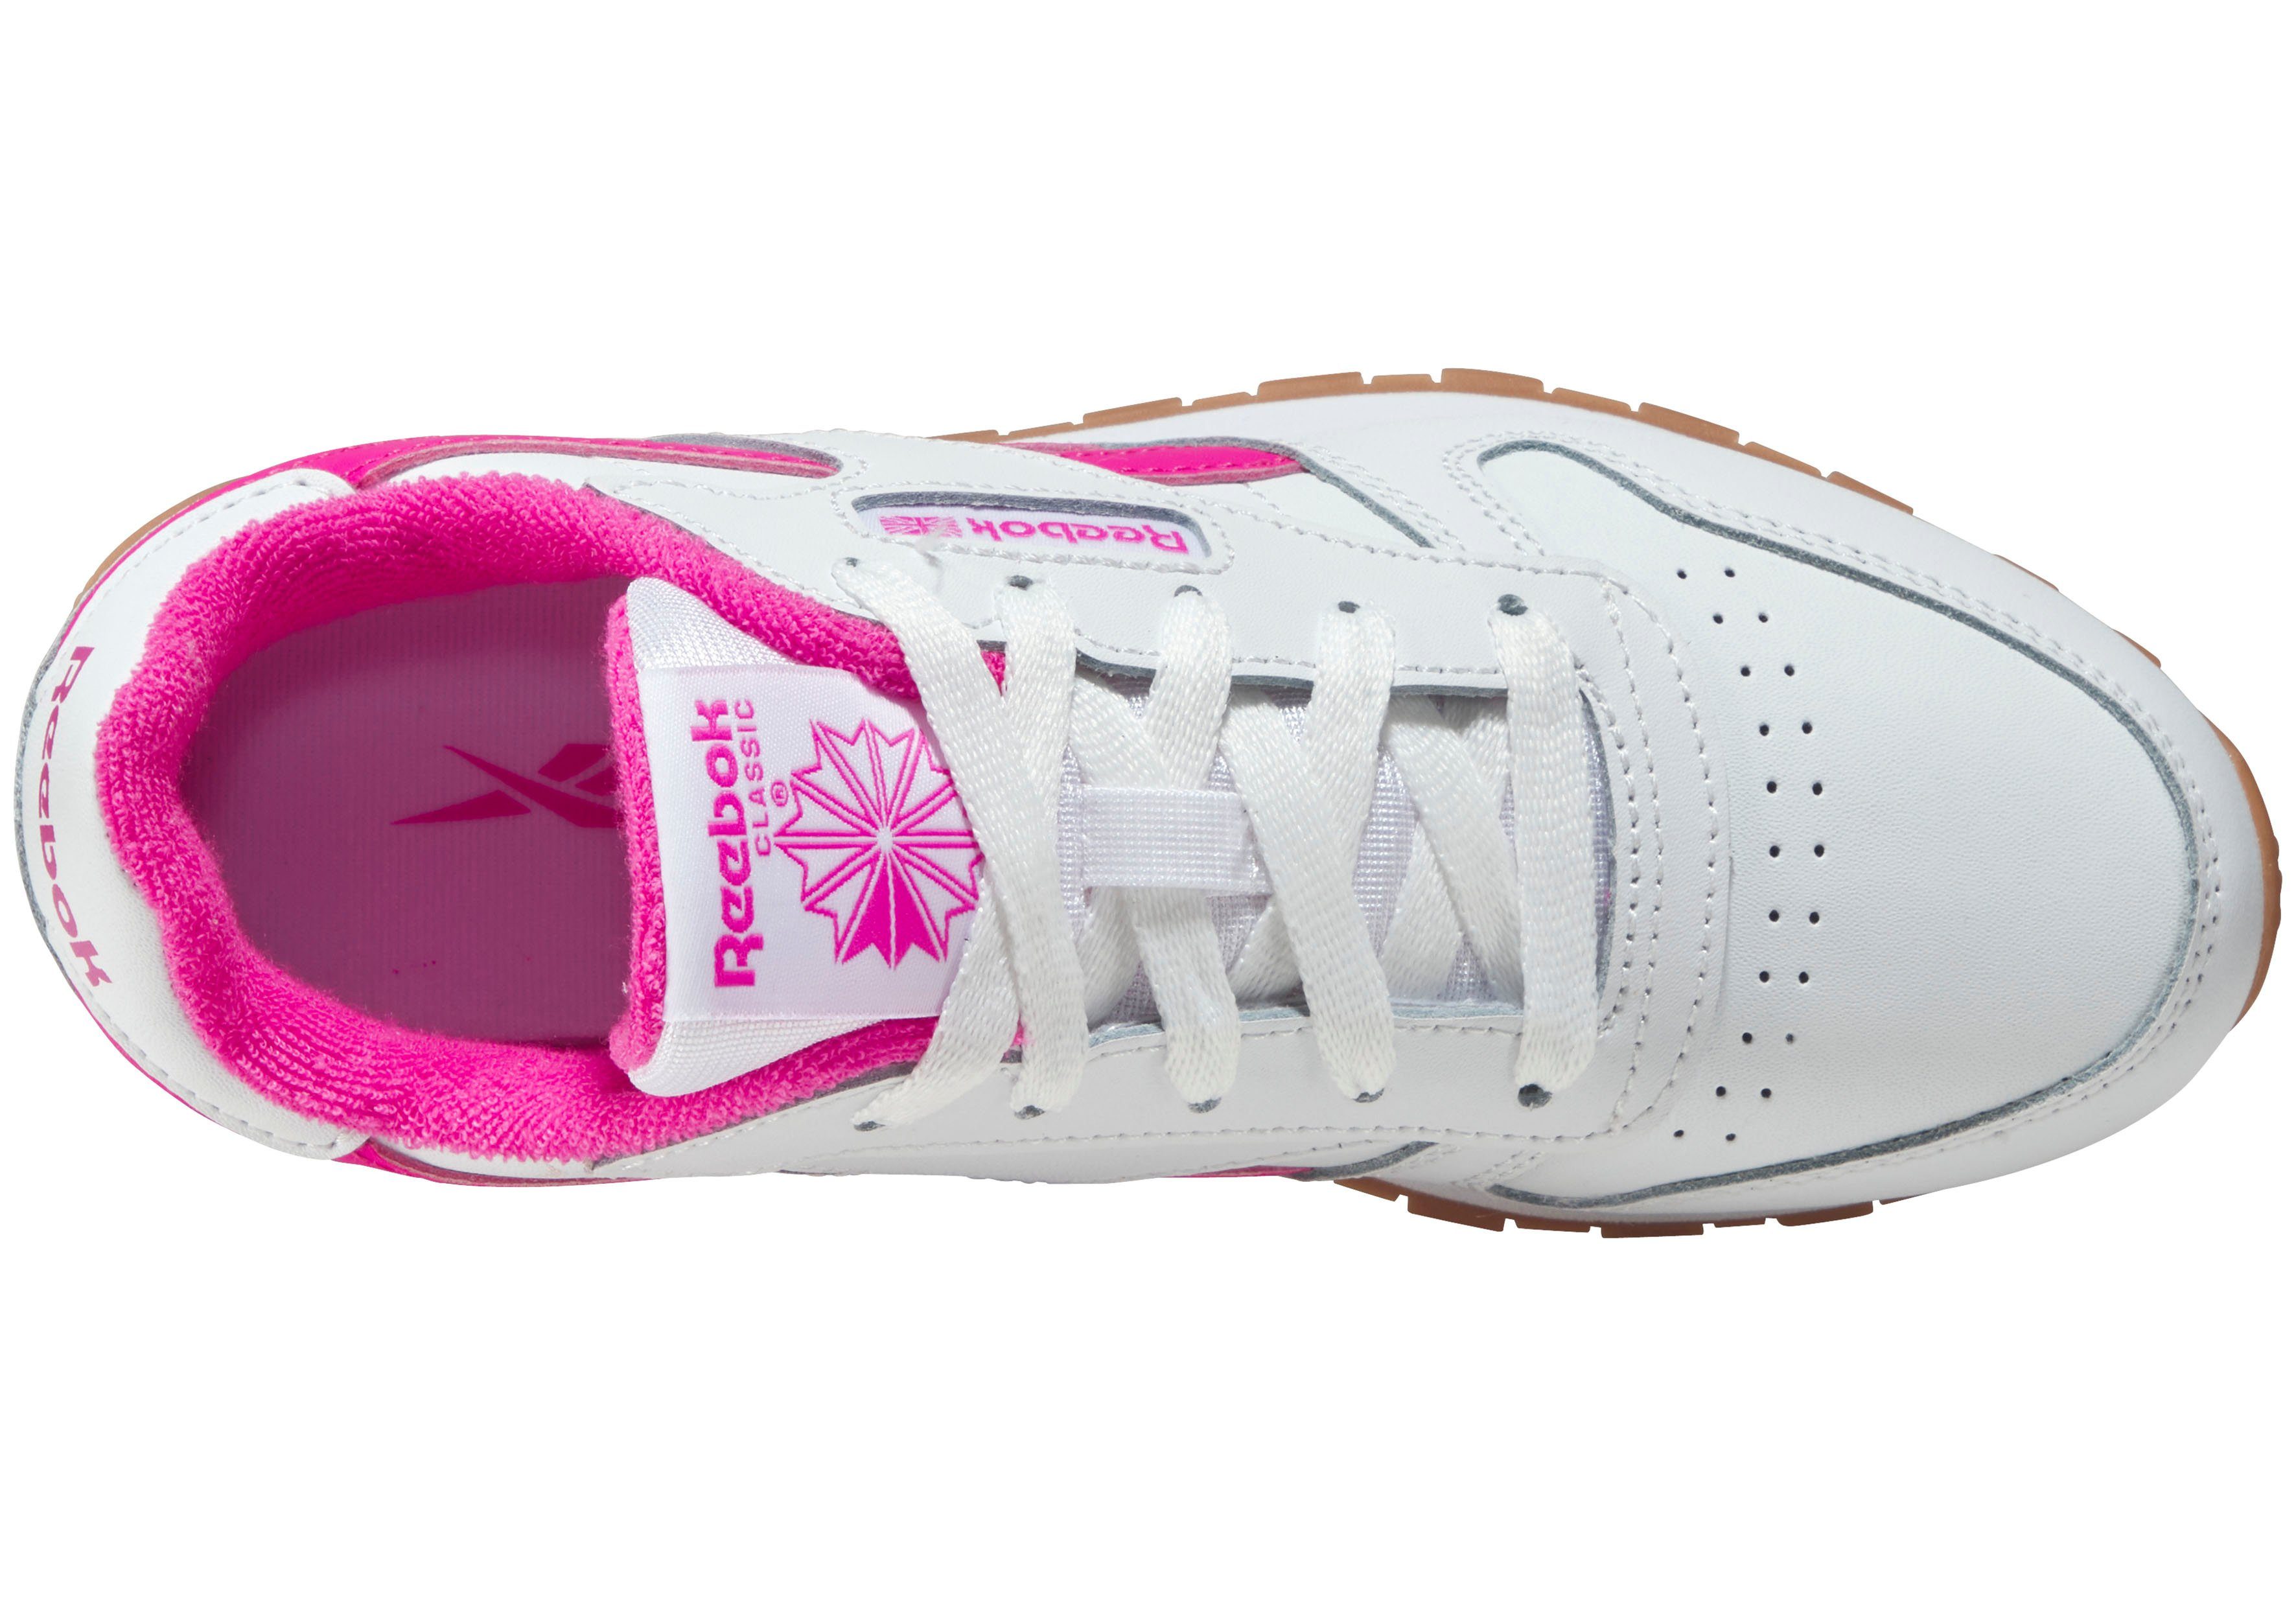 Reebok Classic CLASSIC Sneaker LEATHER weiß-pink